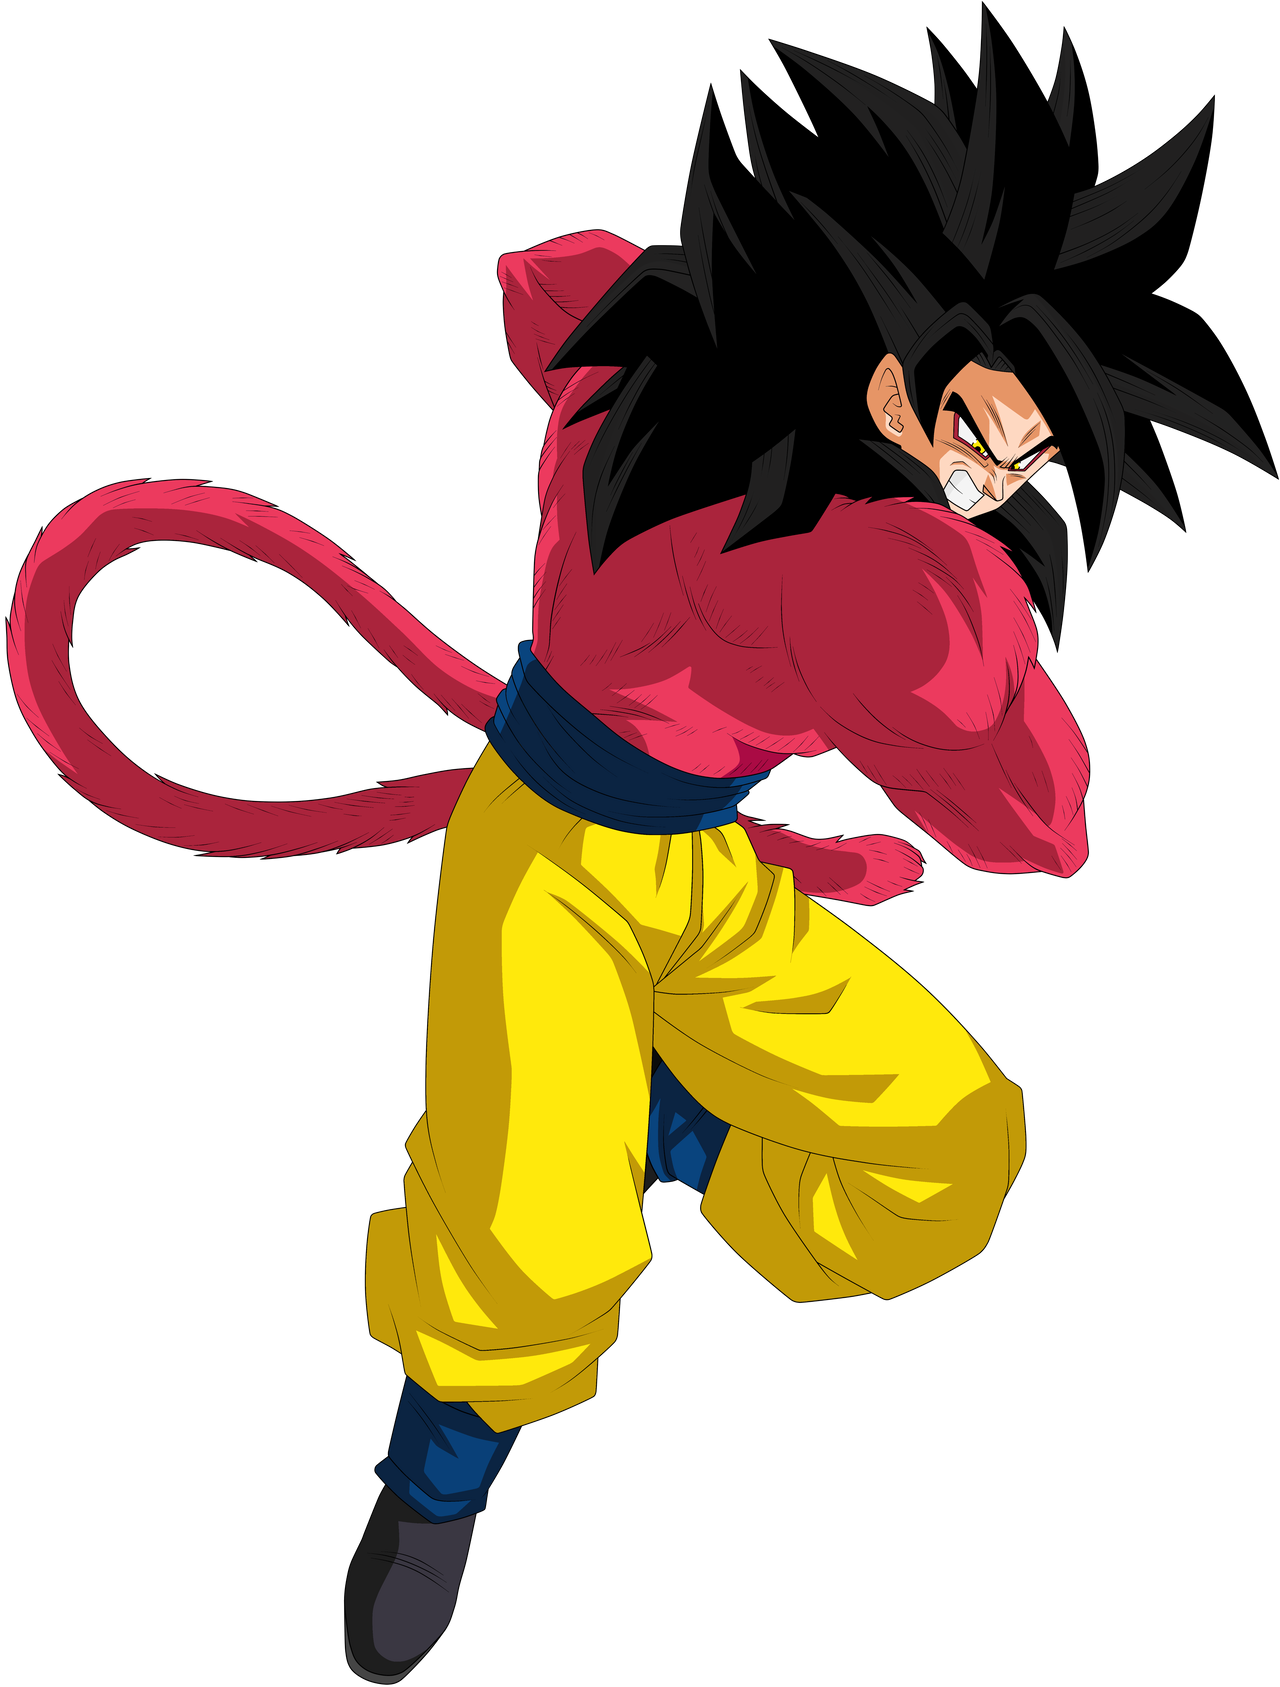 Full Power Super Saiyan 4 Goku [Dokkan] by woodlandbuckle on DeviantArt